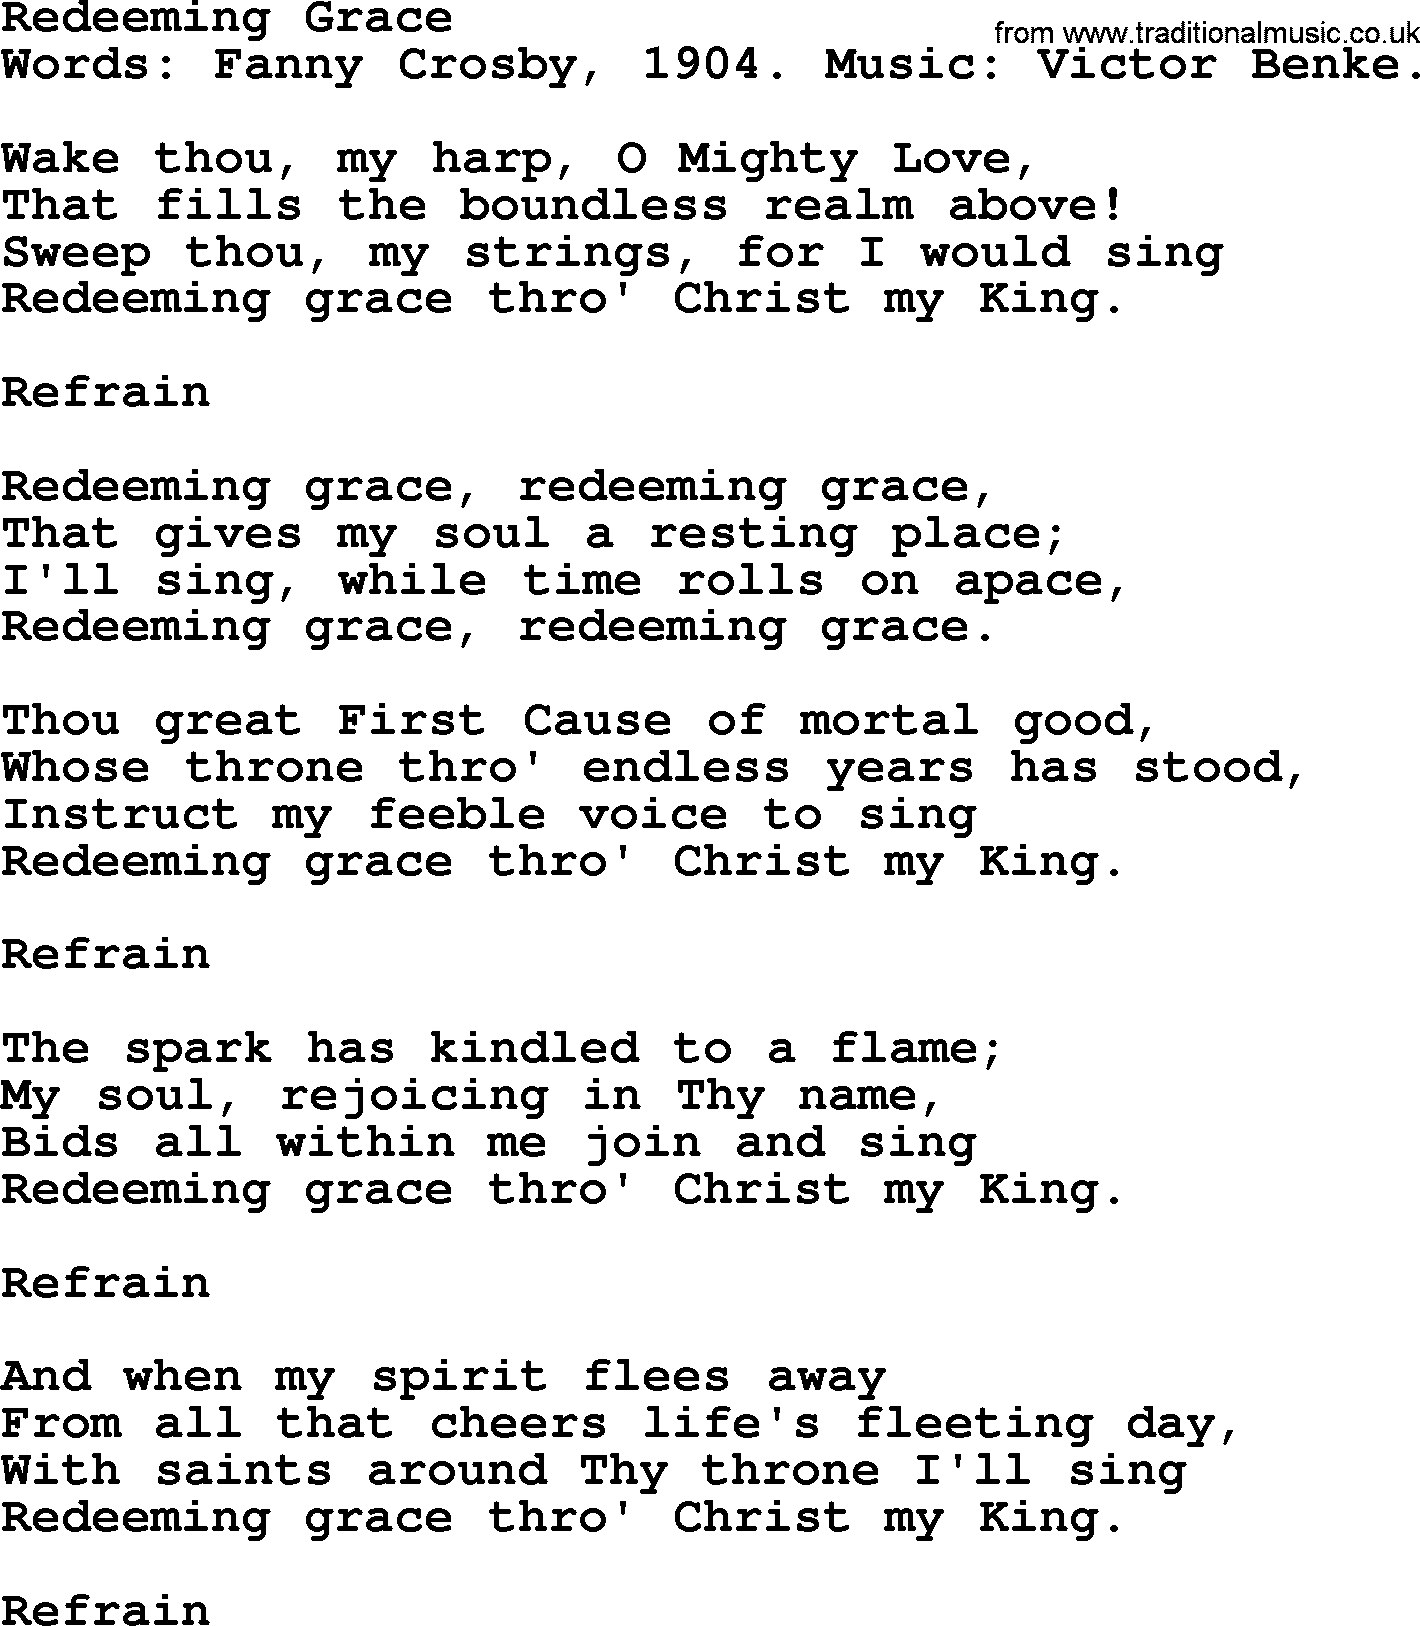 Fanny Crosby song: Redeeming Grace, lyrics